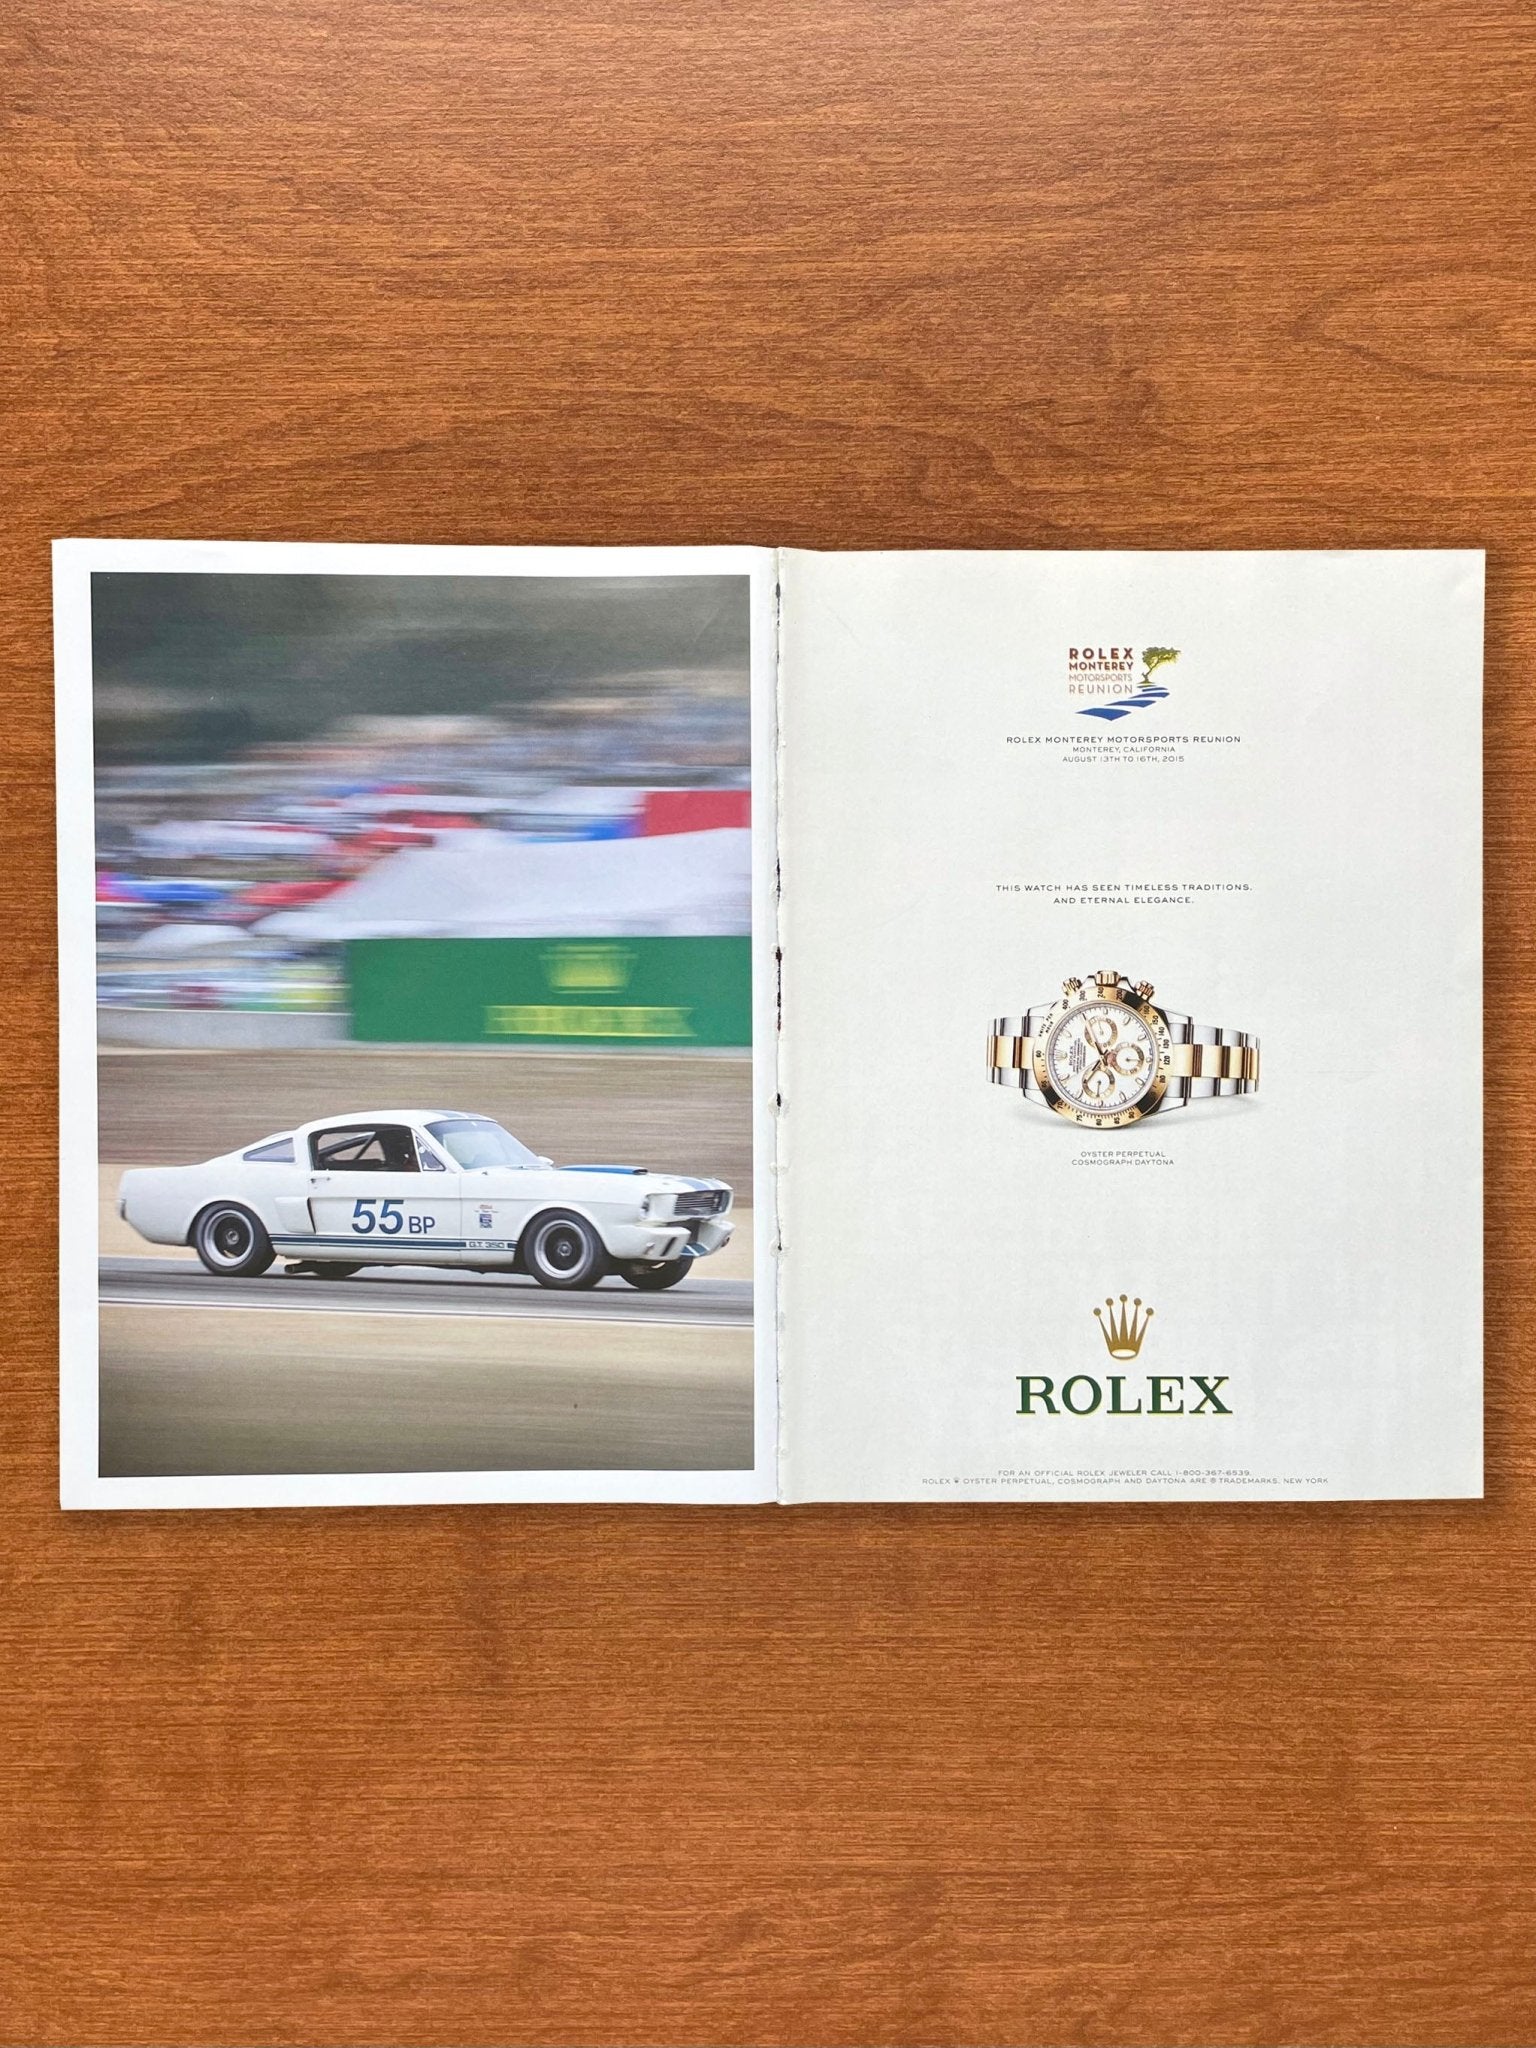 2015 Rolex Daytona Ref. 116523 "Monterey Motorsports Reunion" w/ Ford Mustang Advertisement